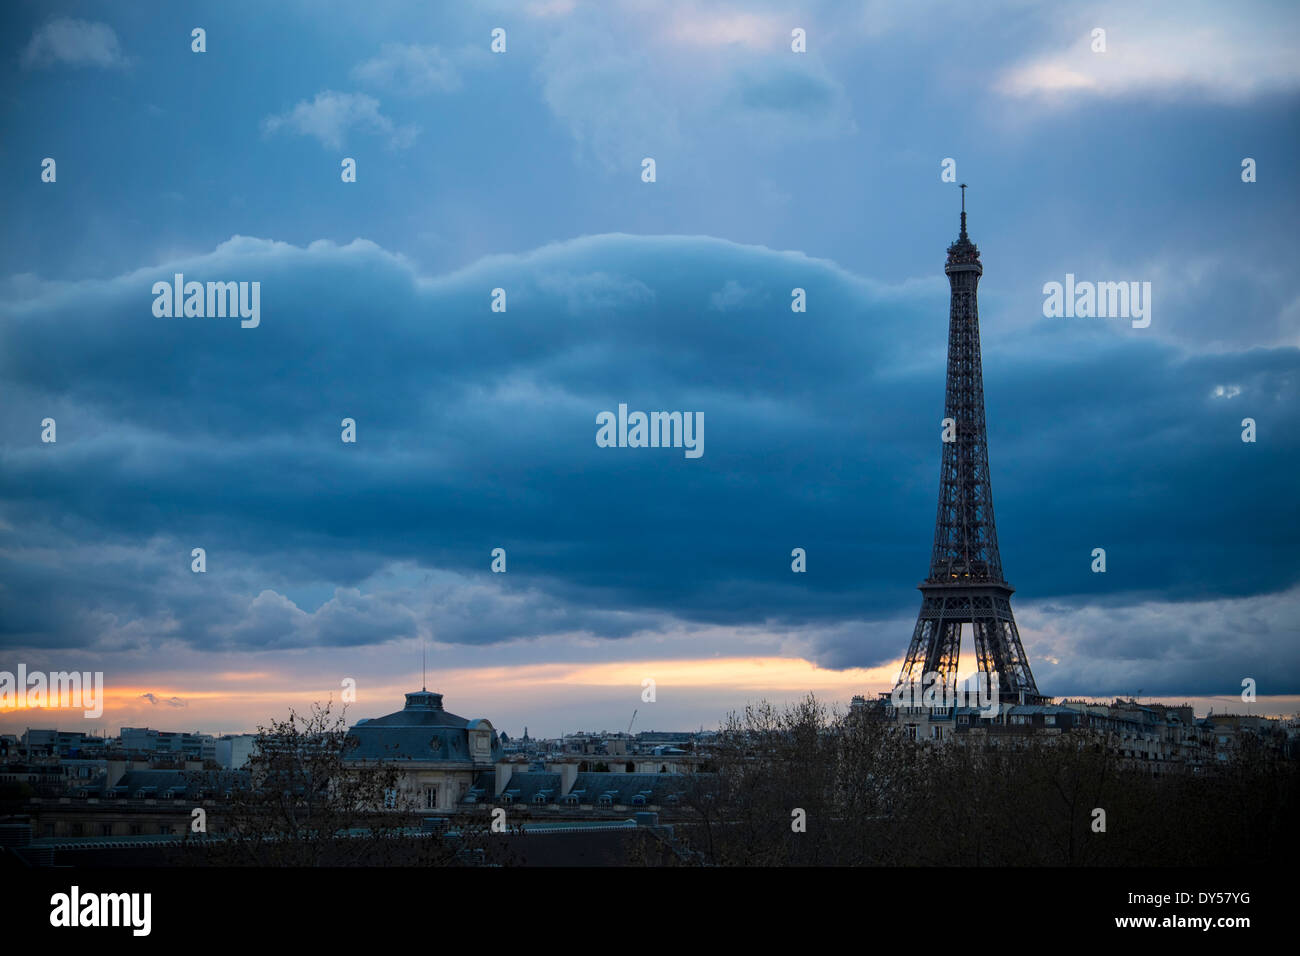 The Eiffel Tower, Paris, France. Stock Photo